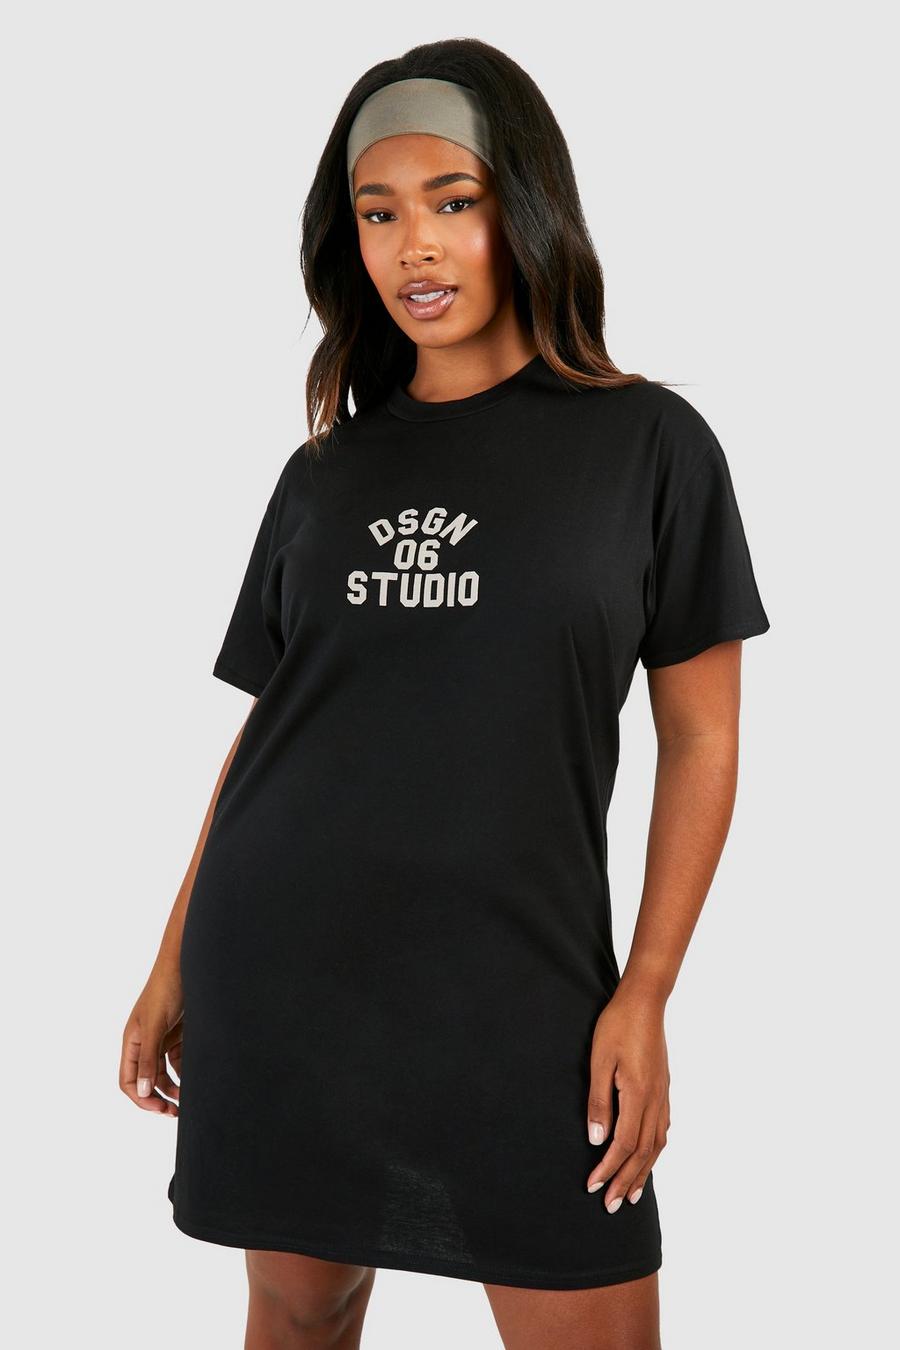 Black Plus Dsgn Studio Graphic T-Shirt Dress